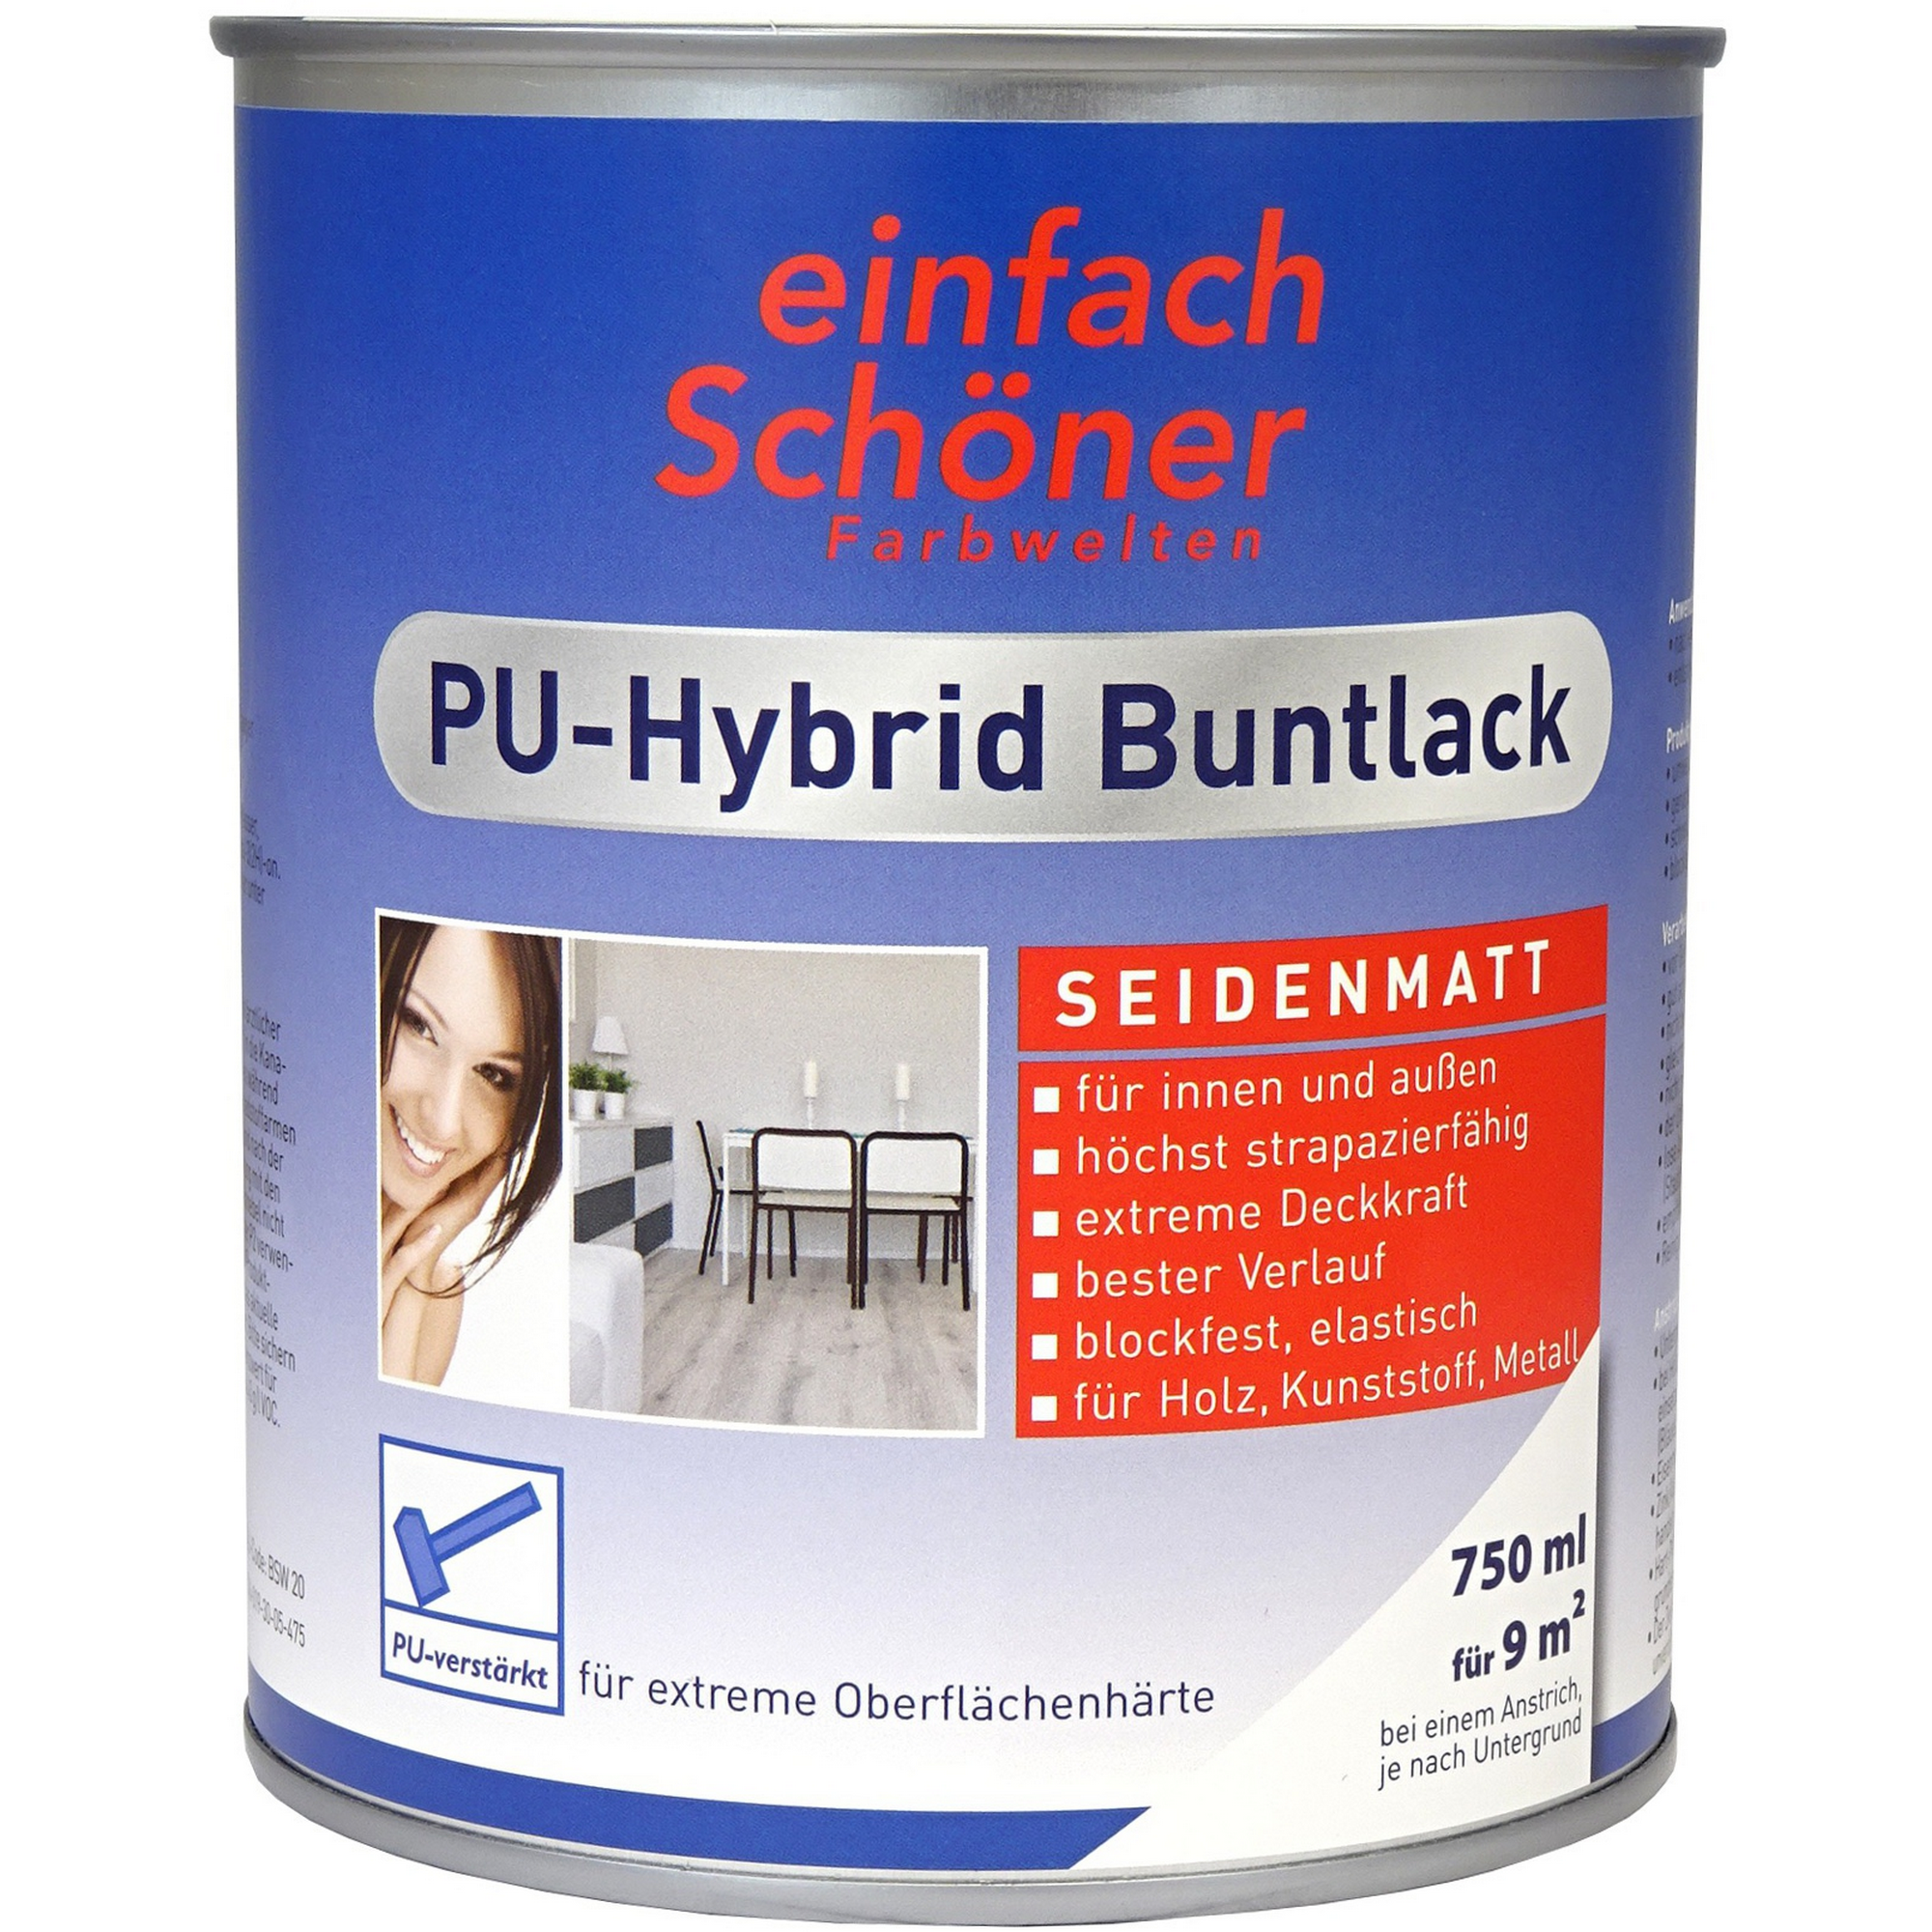 PU-Hybrid Buntlack reinweiß seidenmatt 750 ml + product picture